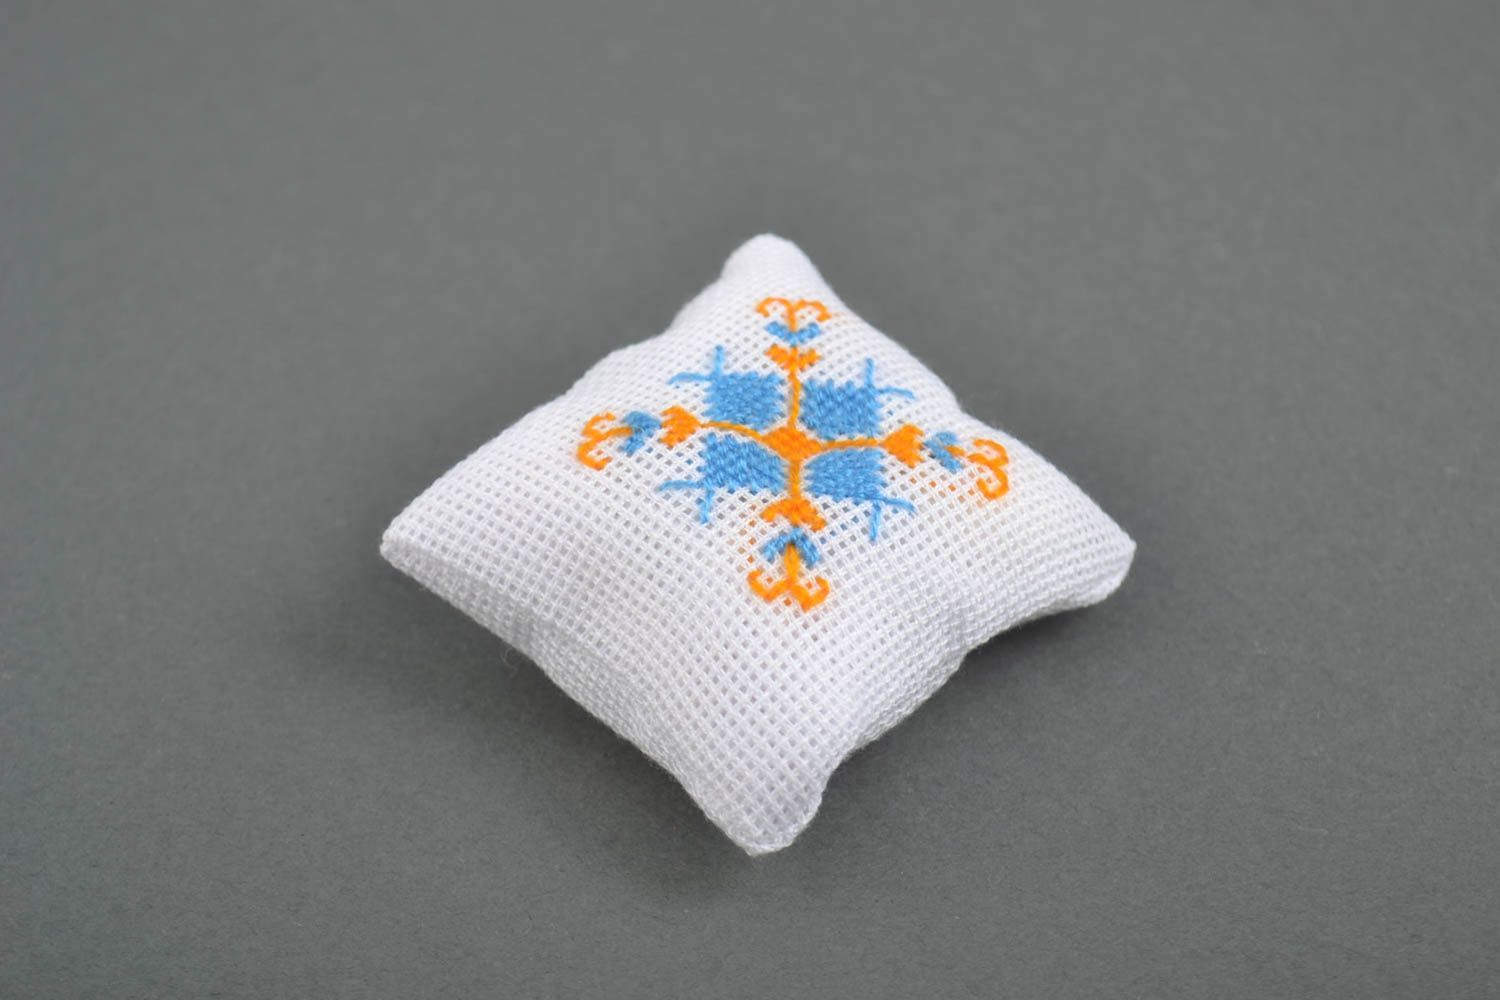 Handmade pincushion sewing accessories pin cushion embroidery supplies  photo 5